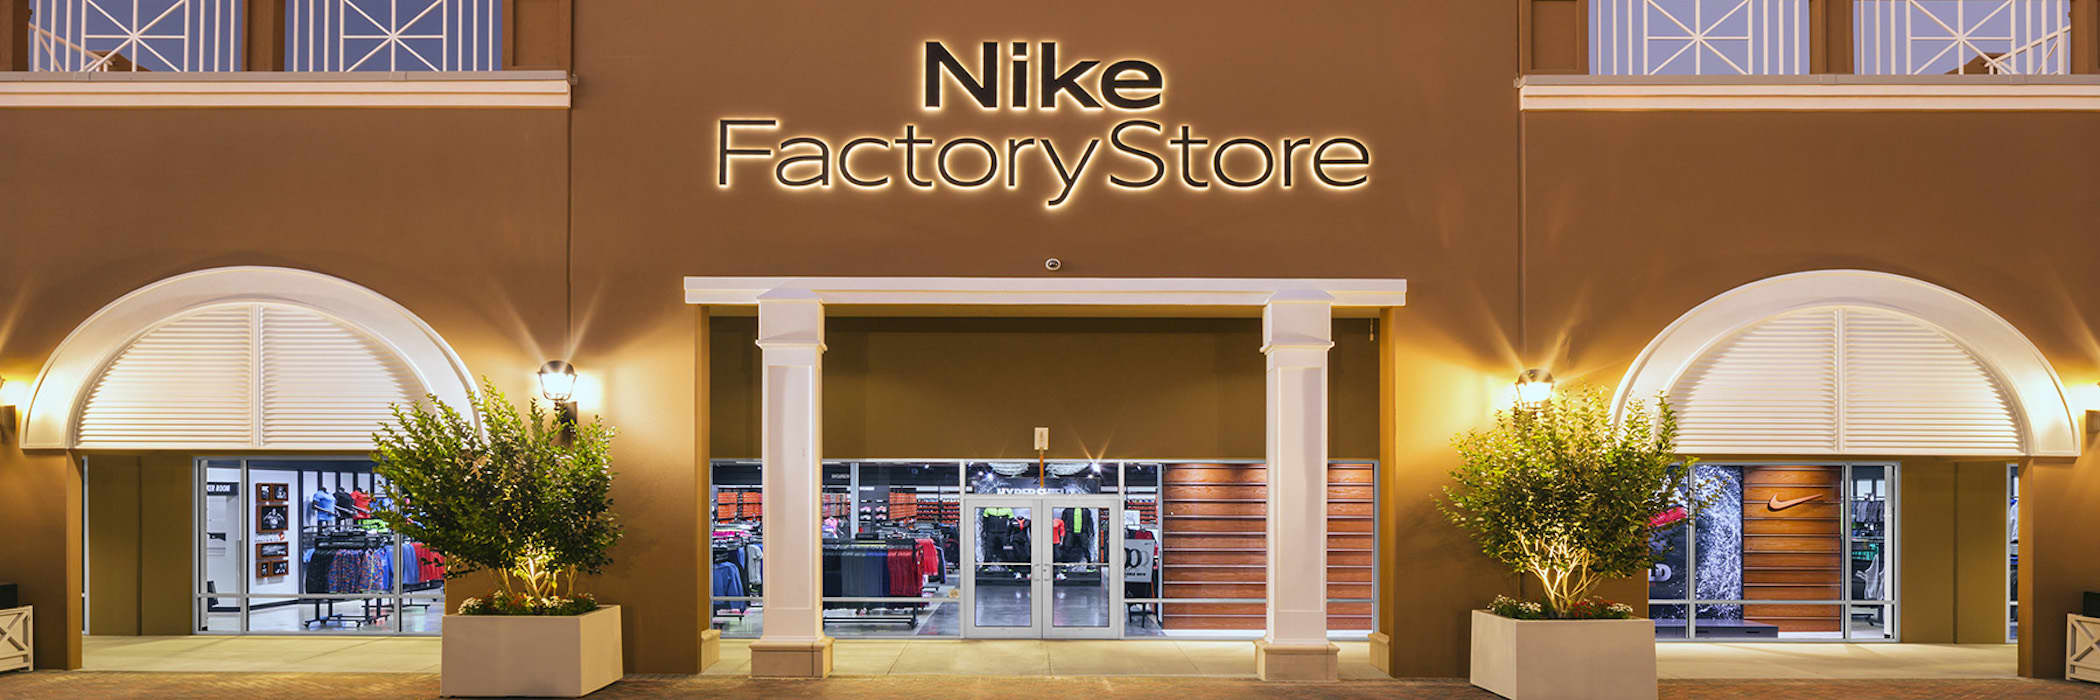 Nike Factory Store - Pearl. Pearl, MS 